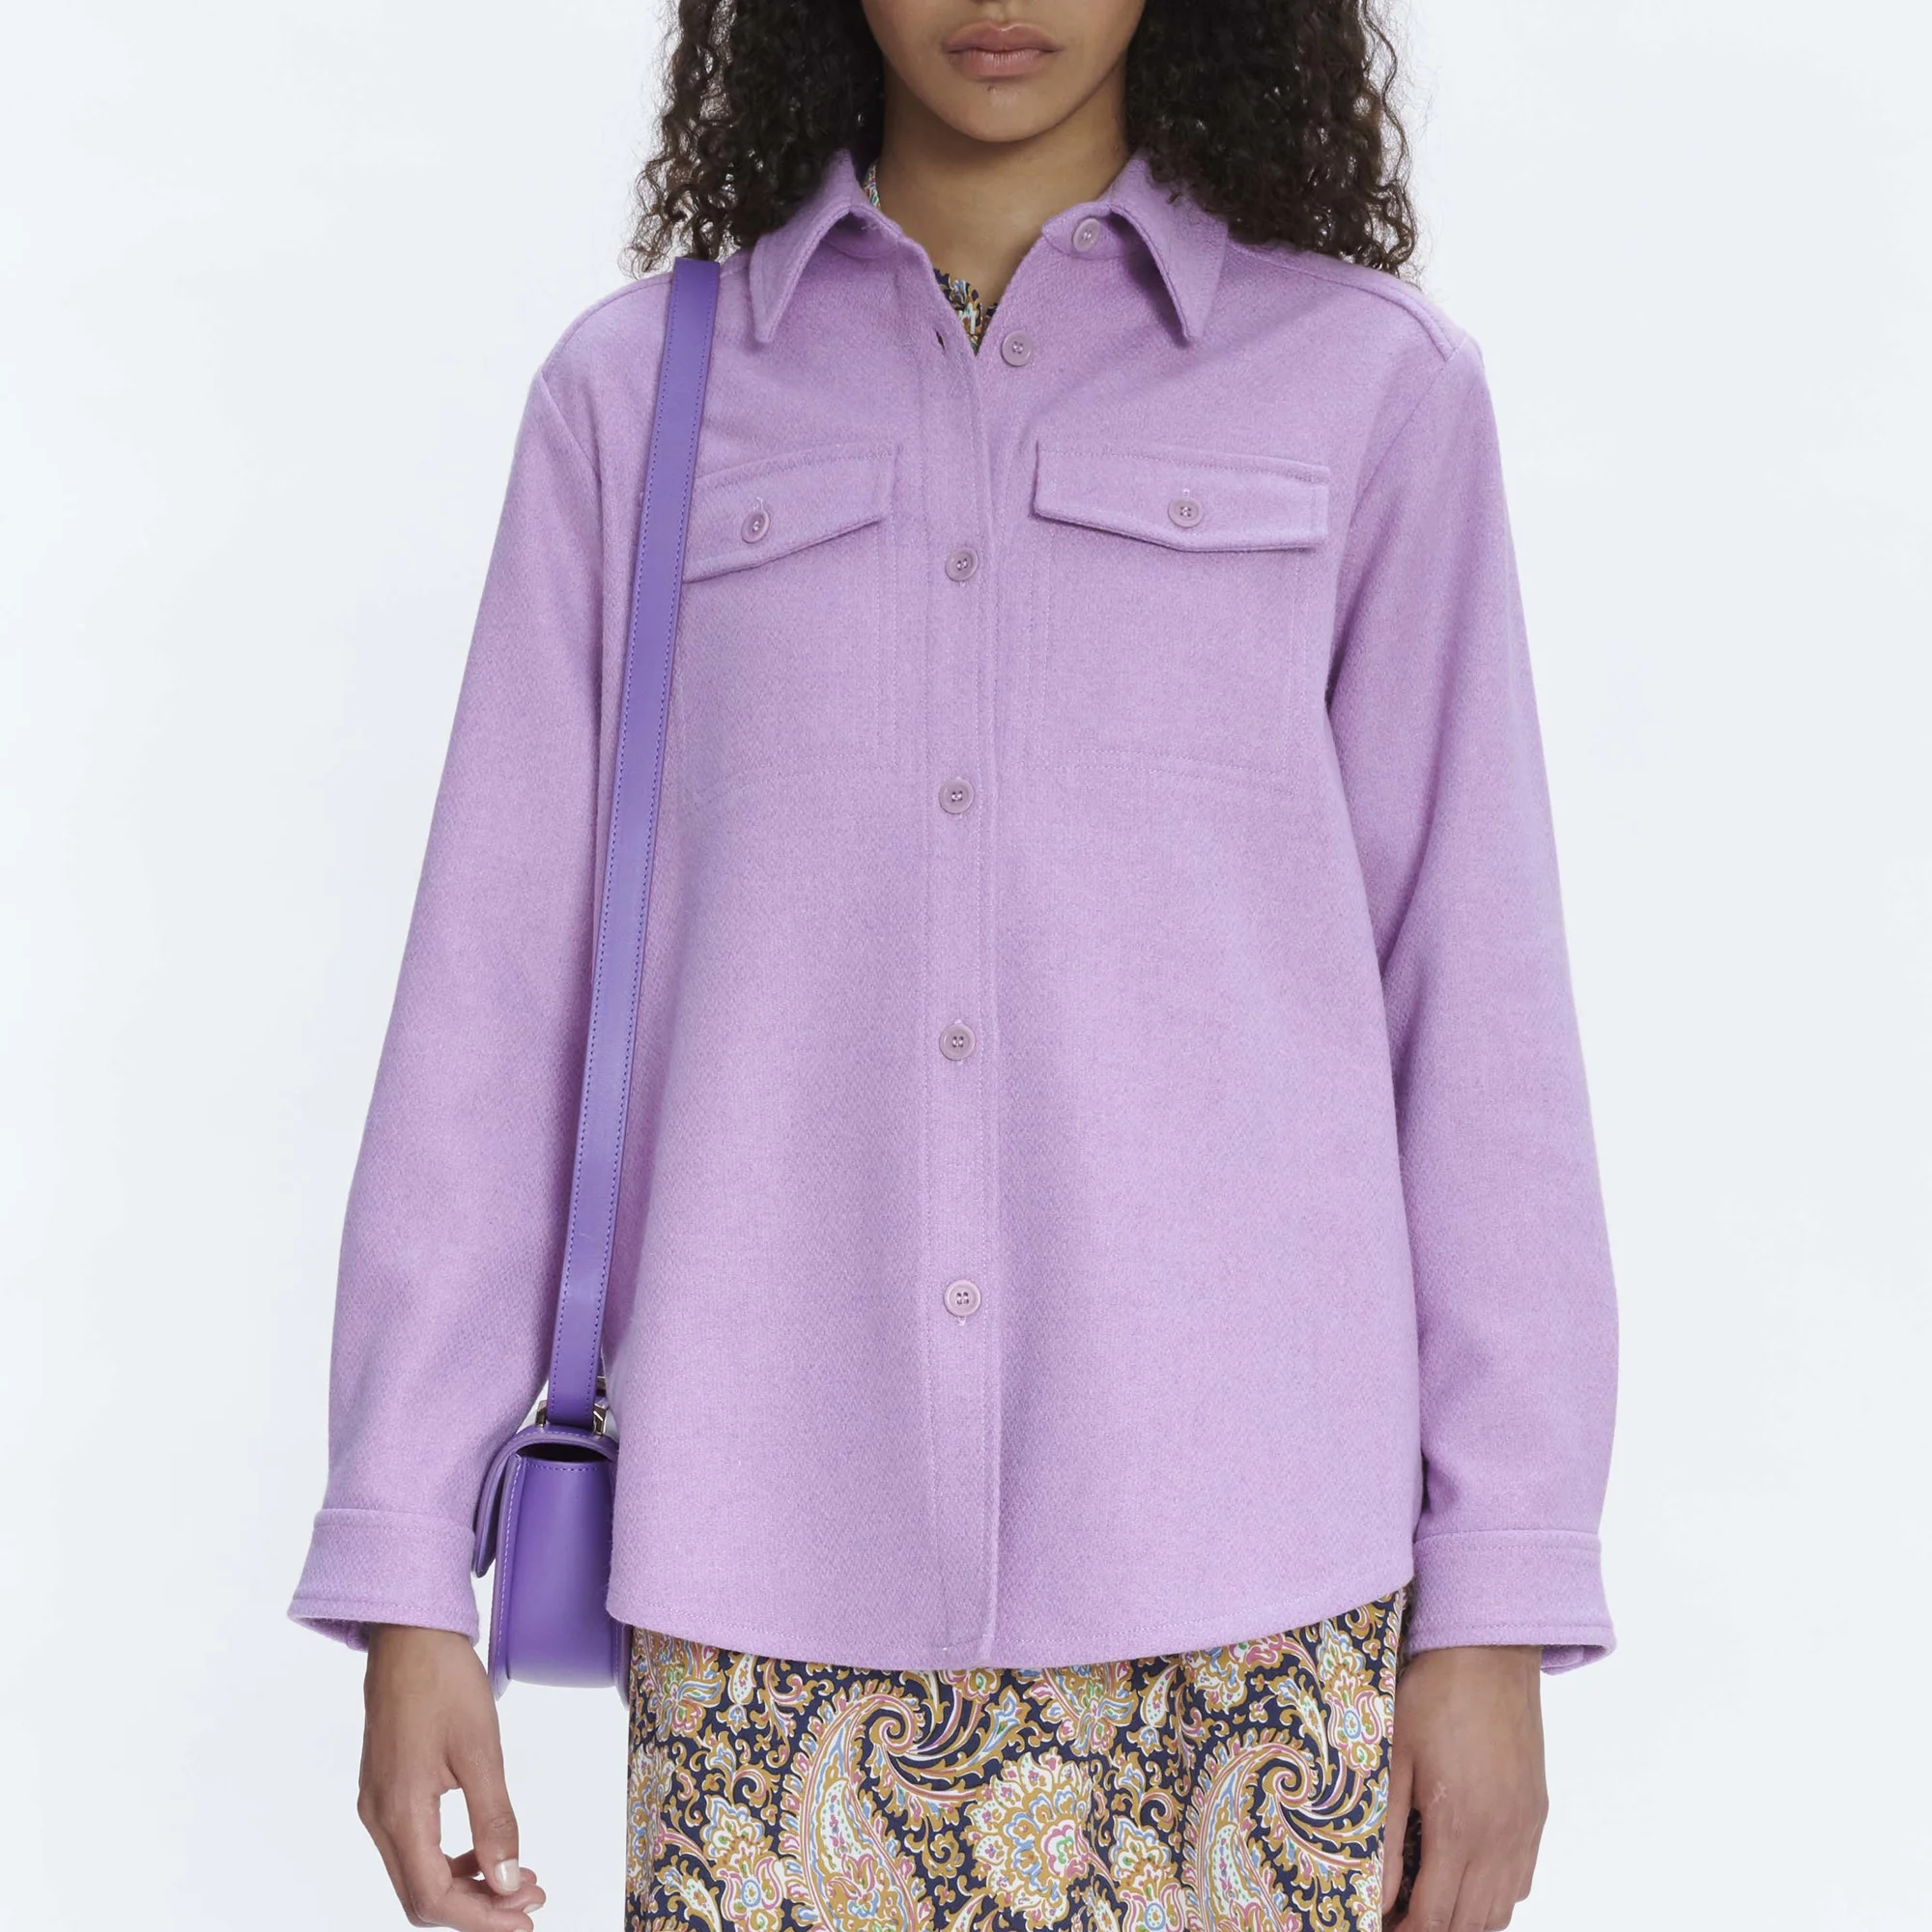 A.P.C. Surchemise Wool-Blend New Tania Shirt - FR 38/UK 10 Image 1